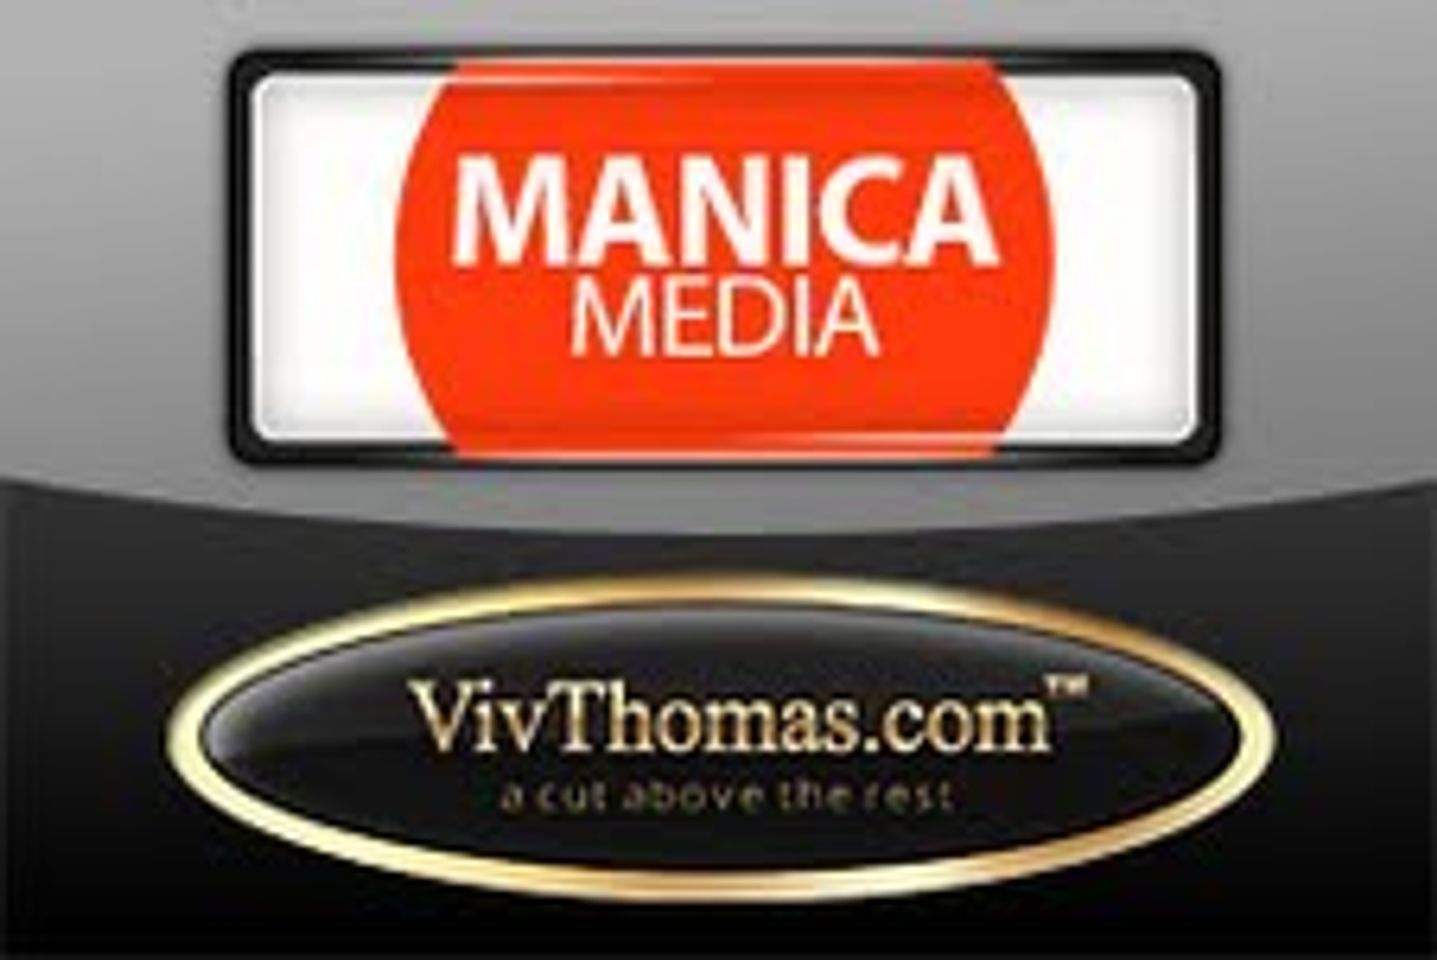 Manica Media to Operate VTCash, Viv Thomas Websites